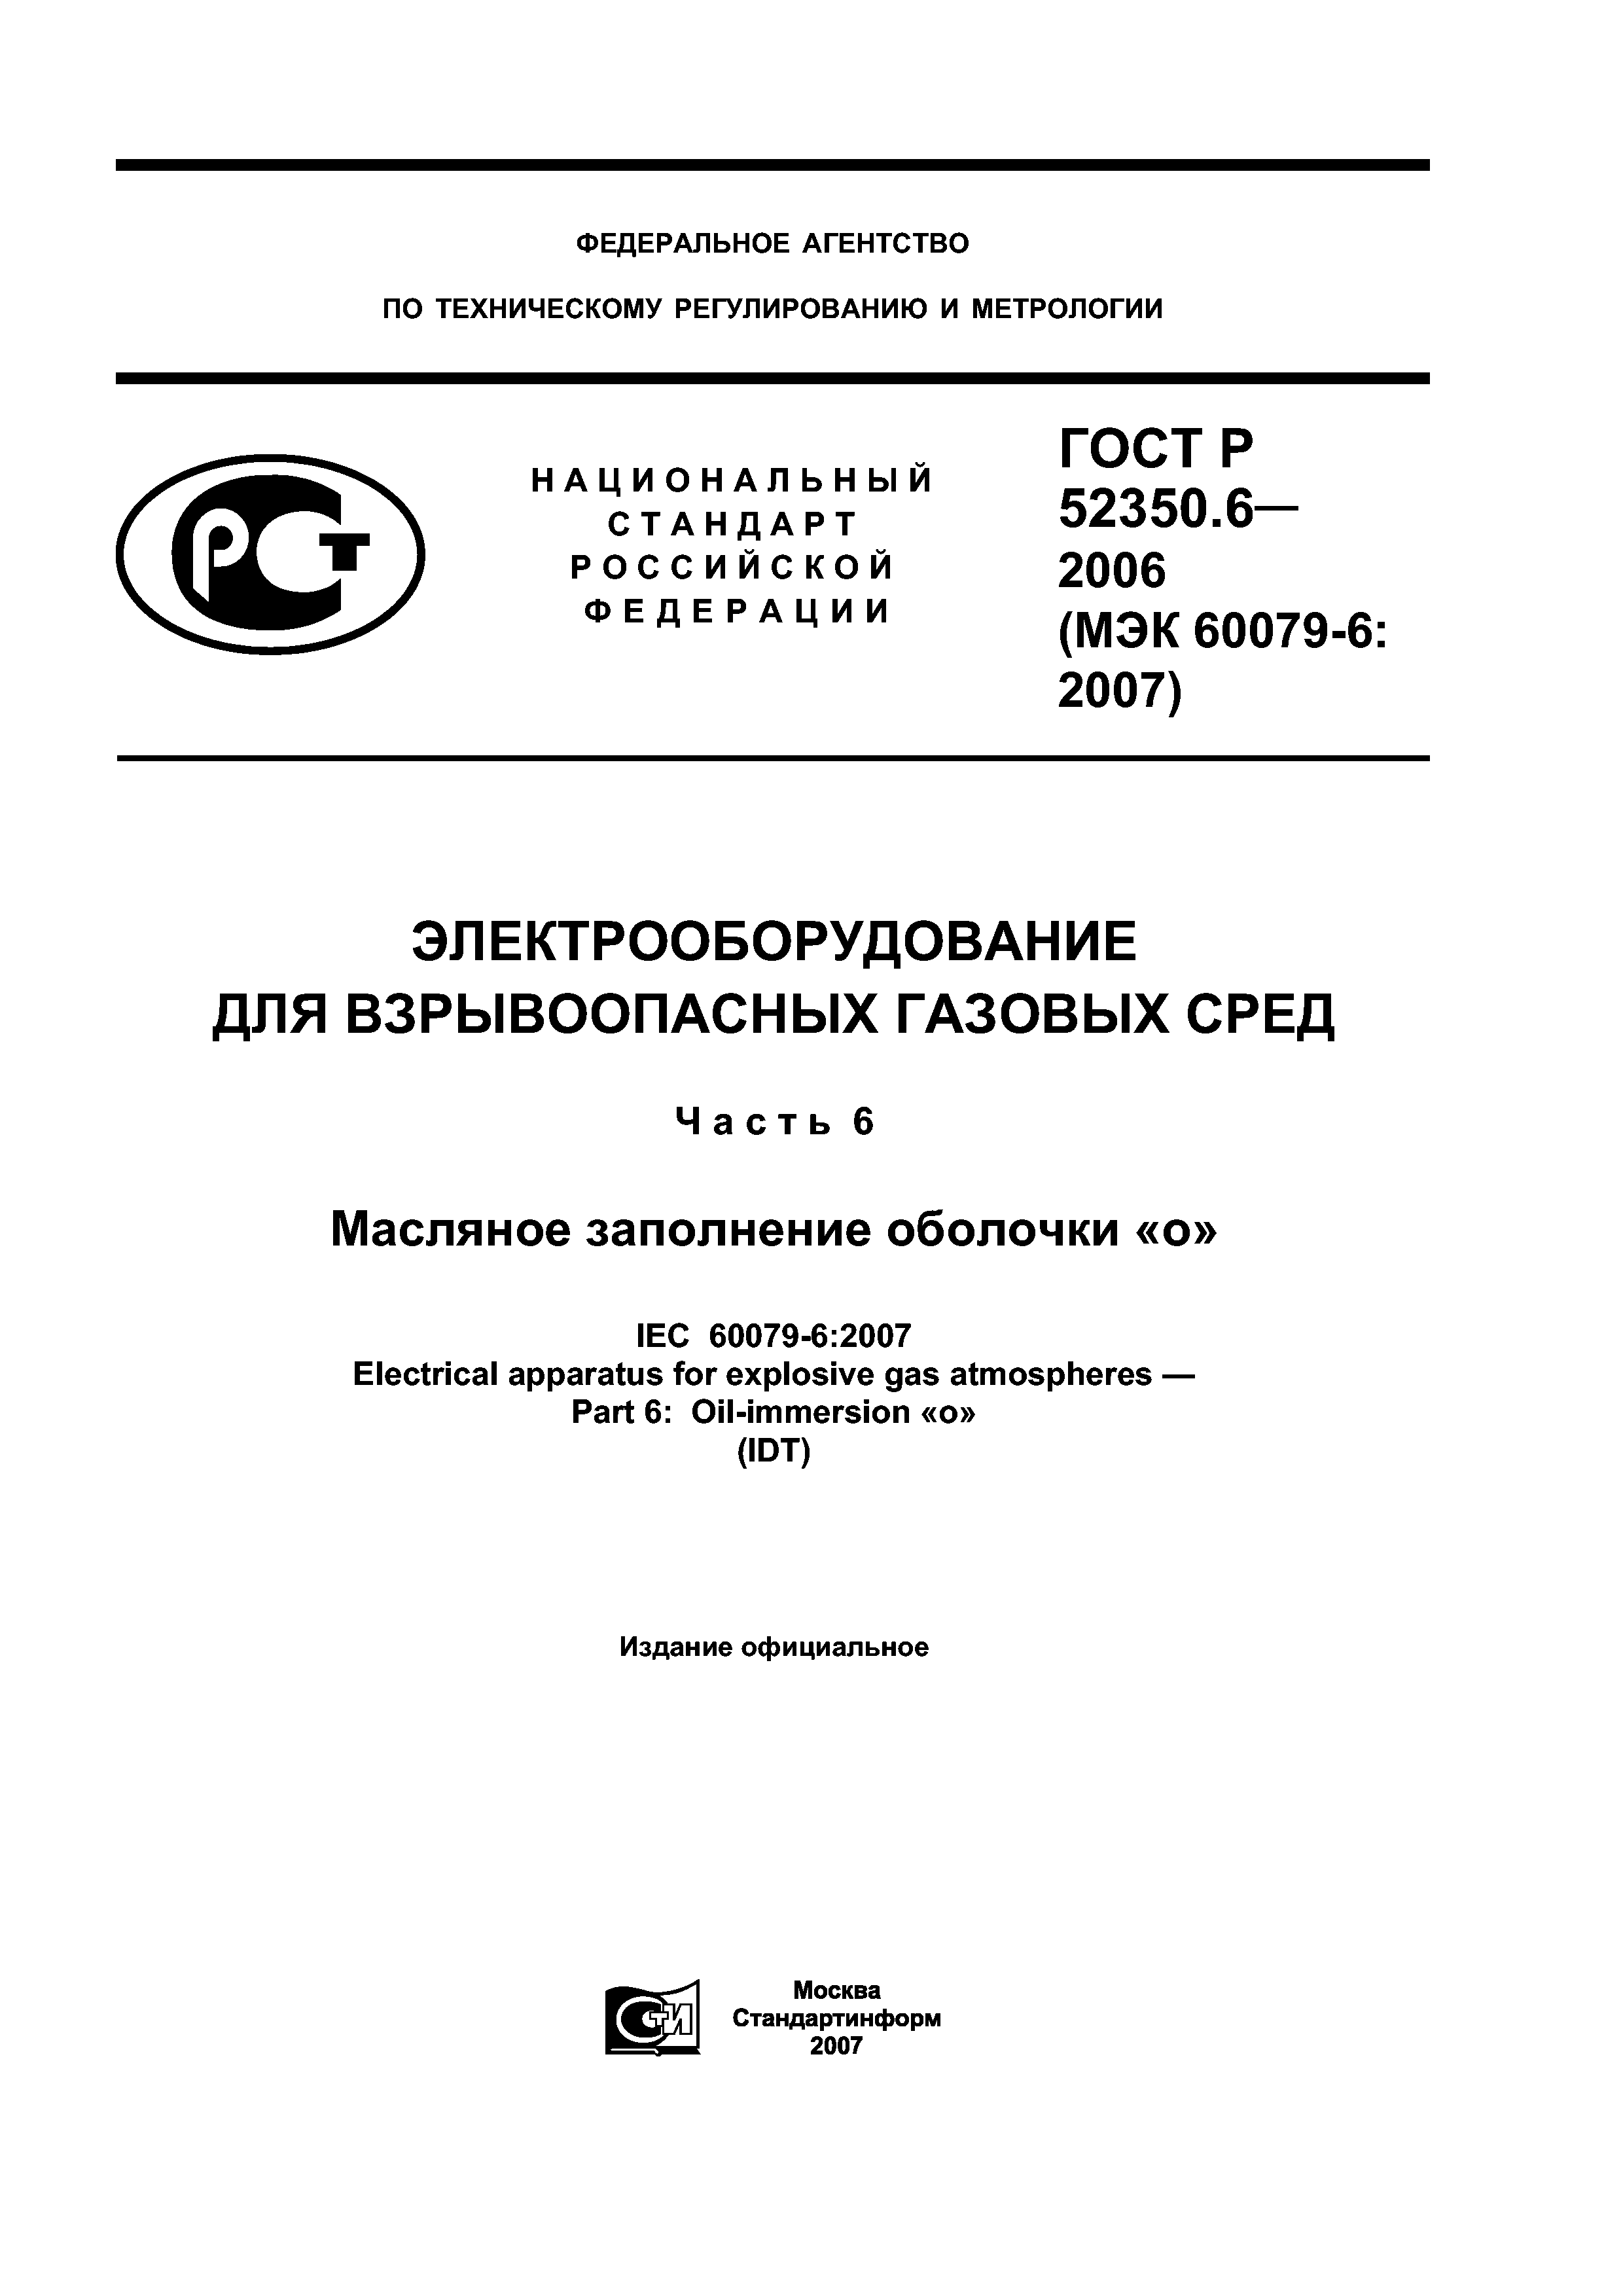 ГОСТ Р 52350.6-2006